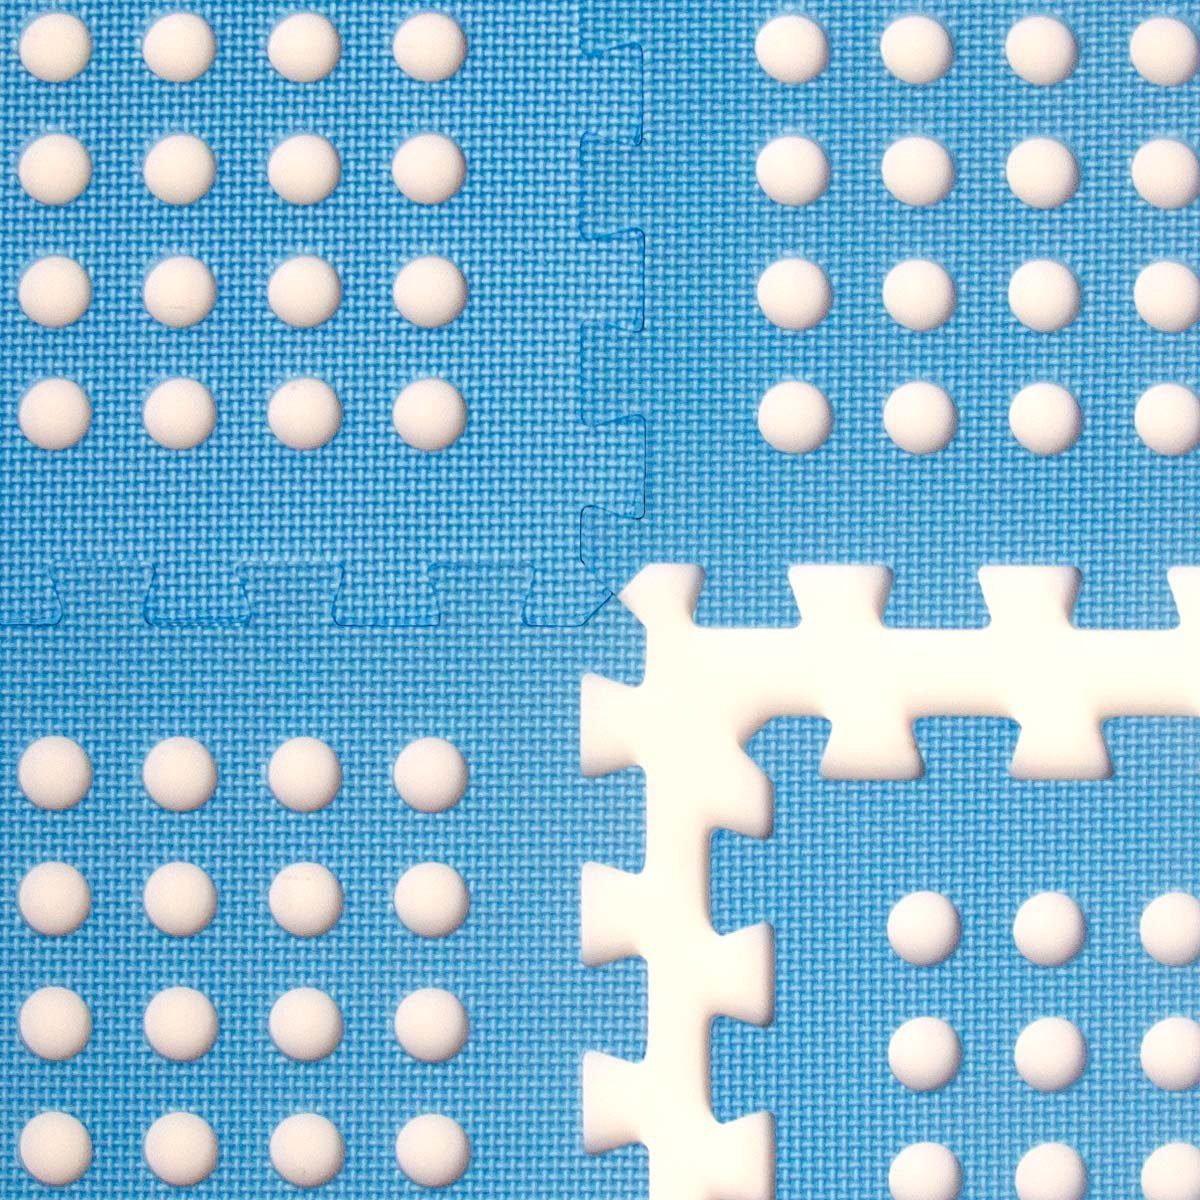 Poolmatte, Stecksystem EVA Blau 62x62cm Bodenmatte eyepower Gittermatte rutschfest